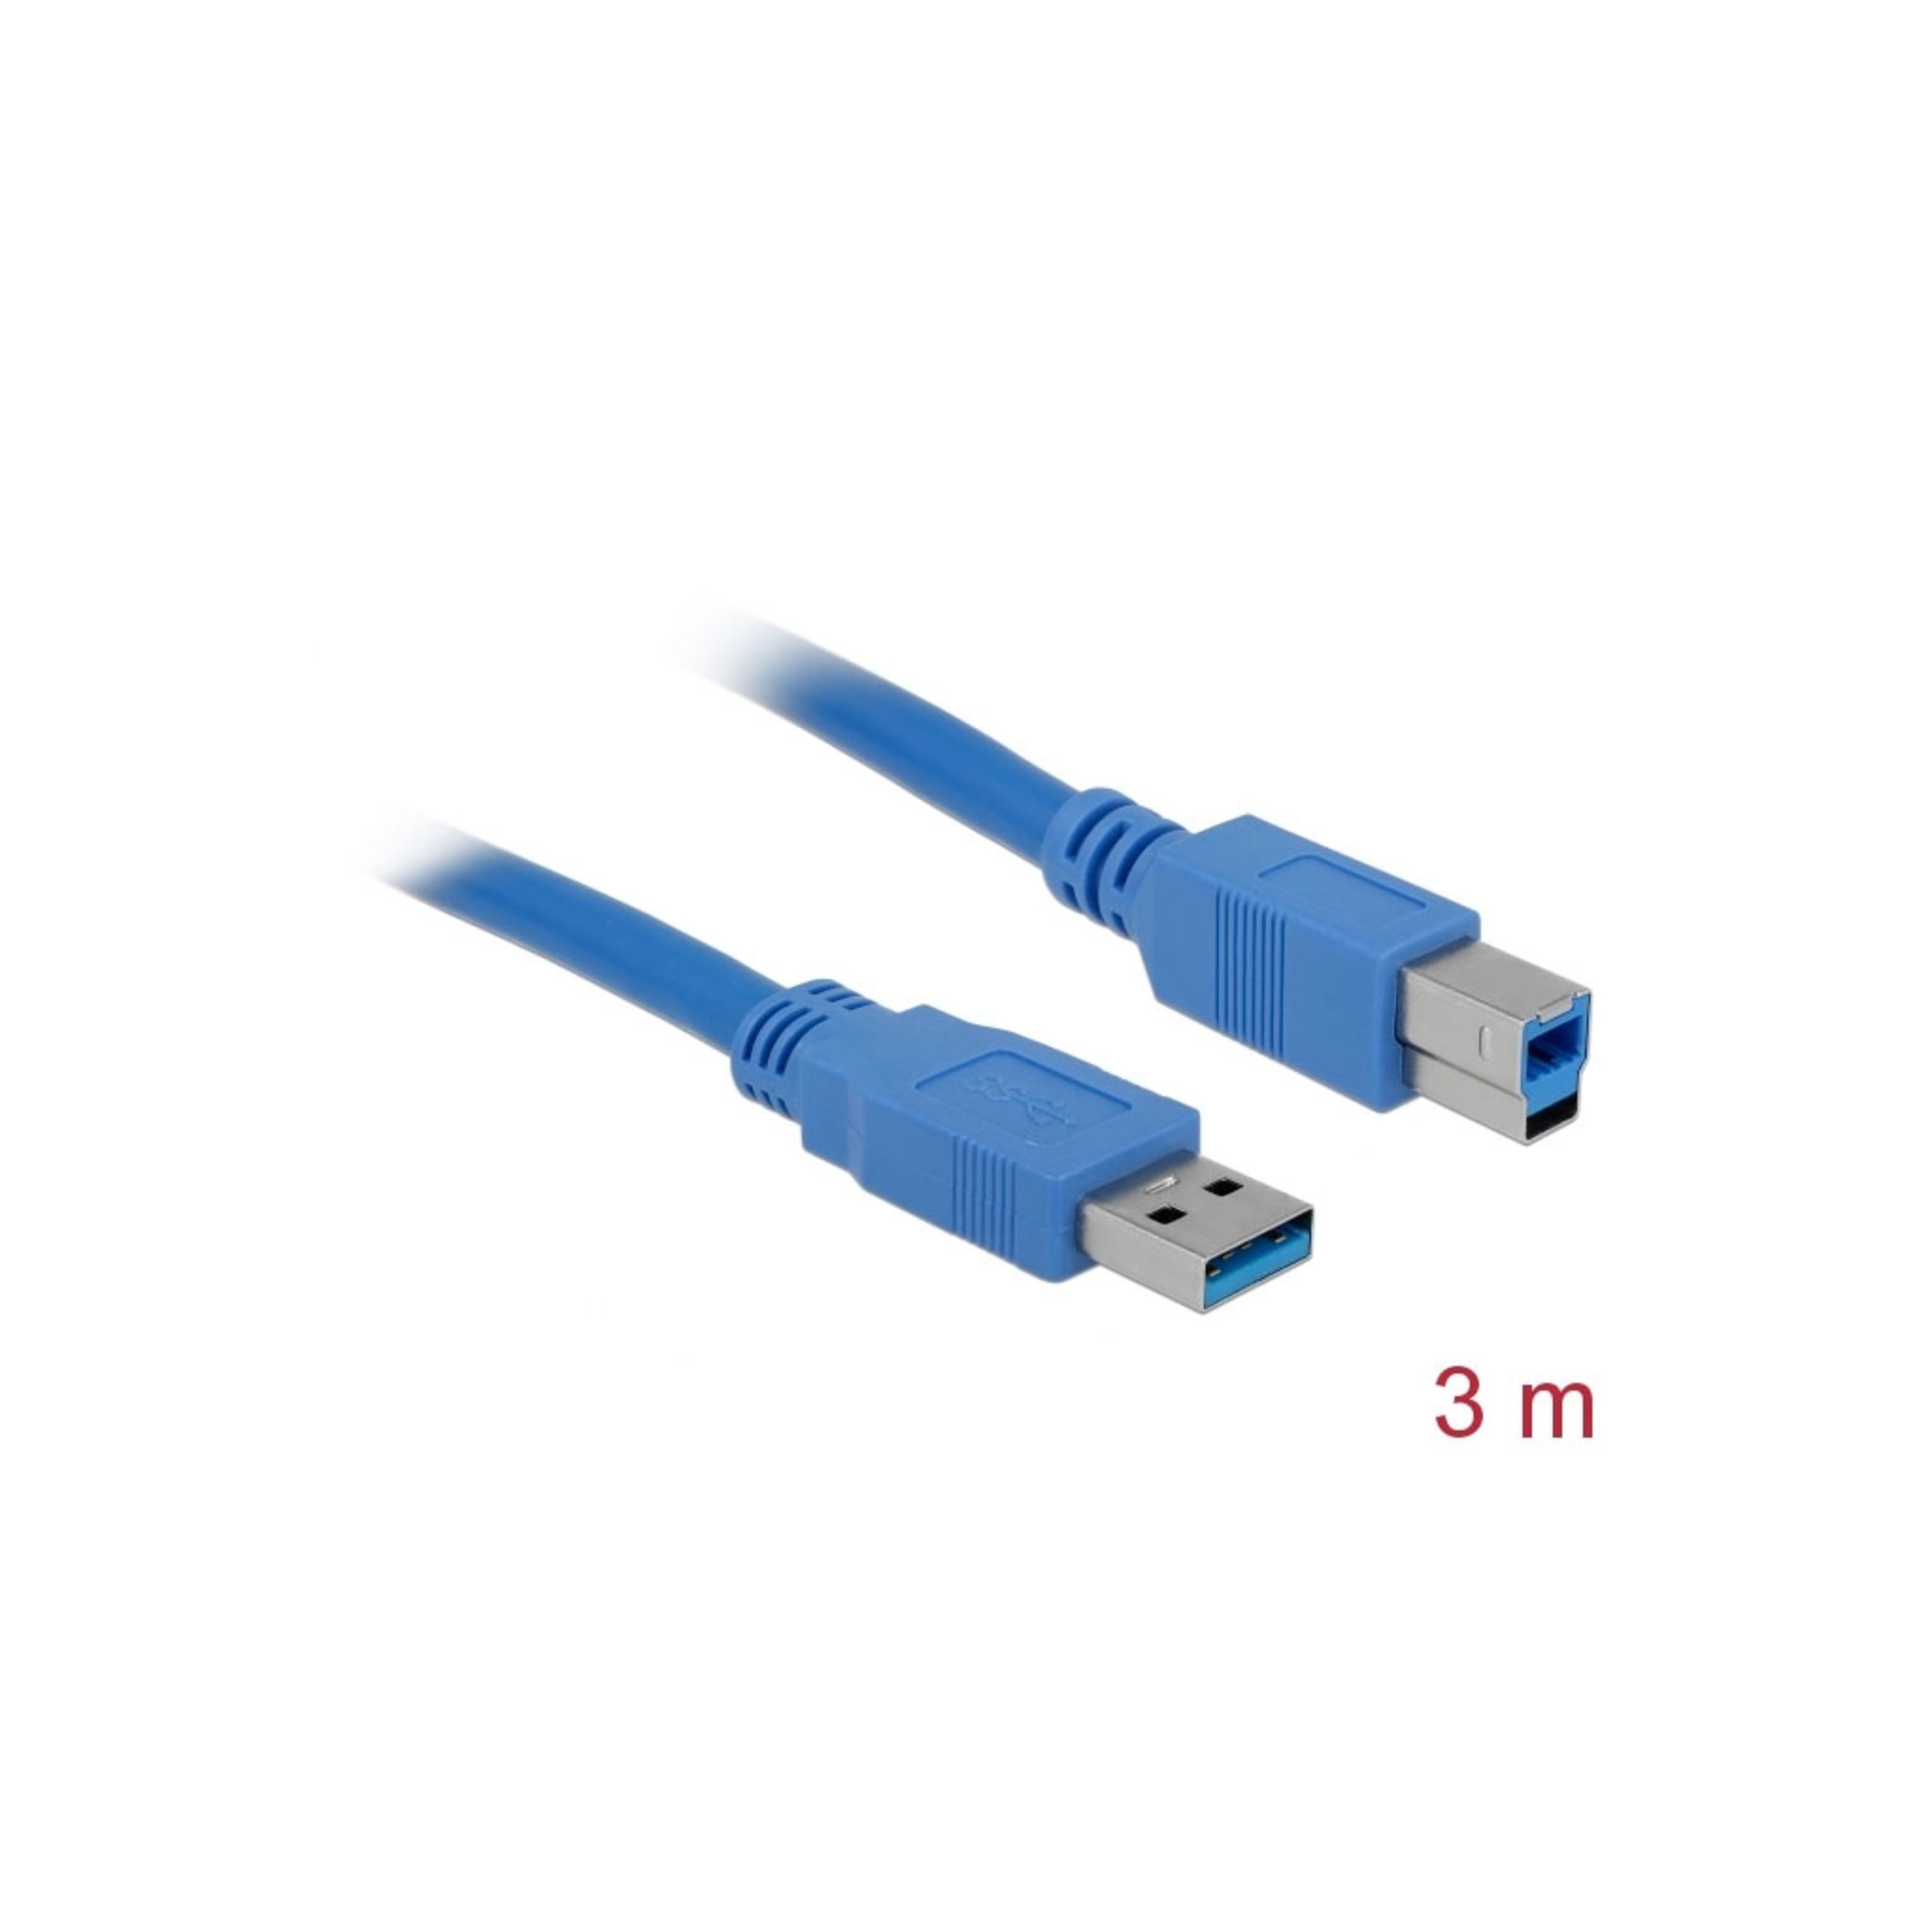 DELOCK - Kabel USB 3.0 Typ-A Stecker  USB 3.0 Typ-B Stecker 3m